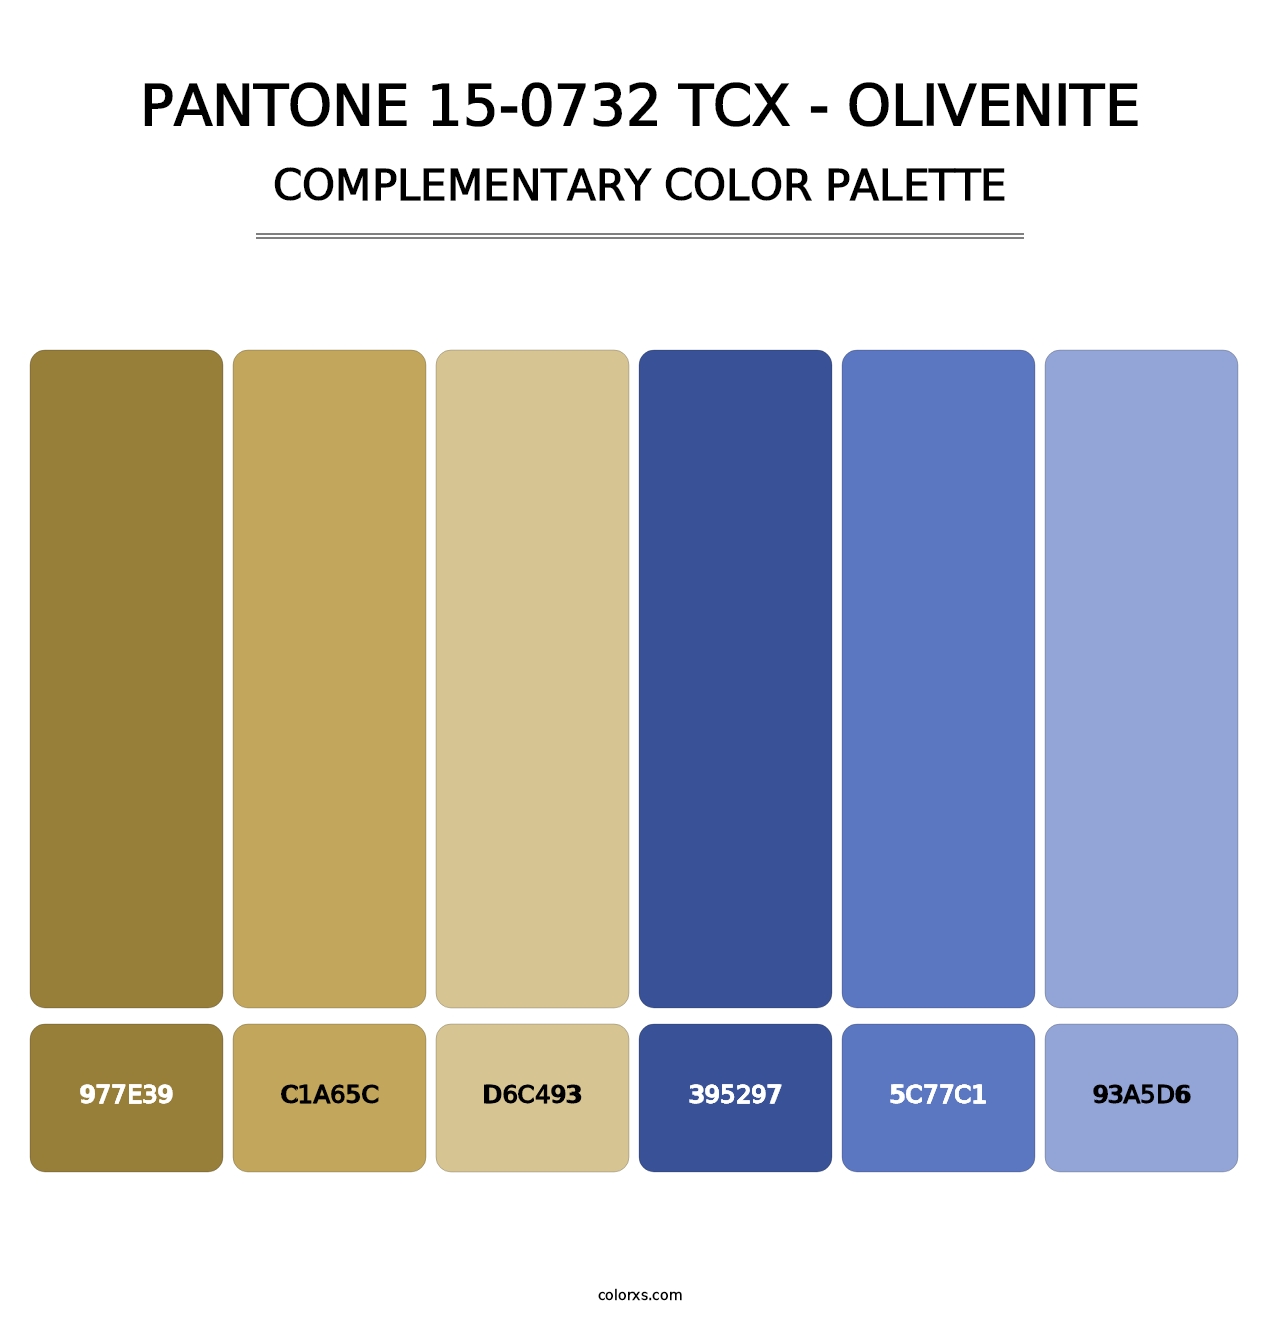 PANTONE 15-0732 TCX - Olivenite - Complementary Color Palette